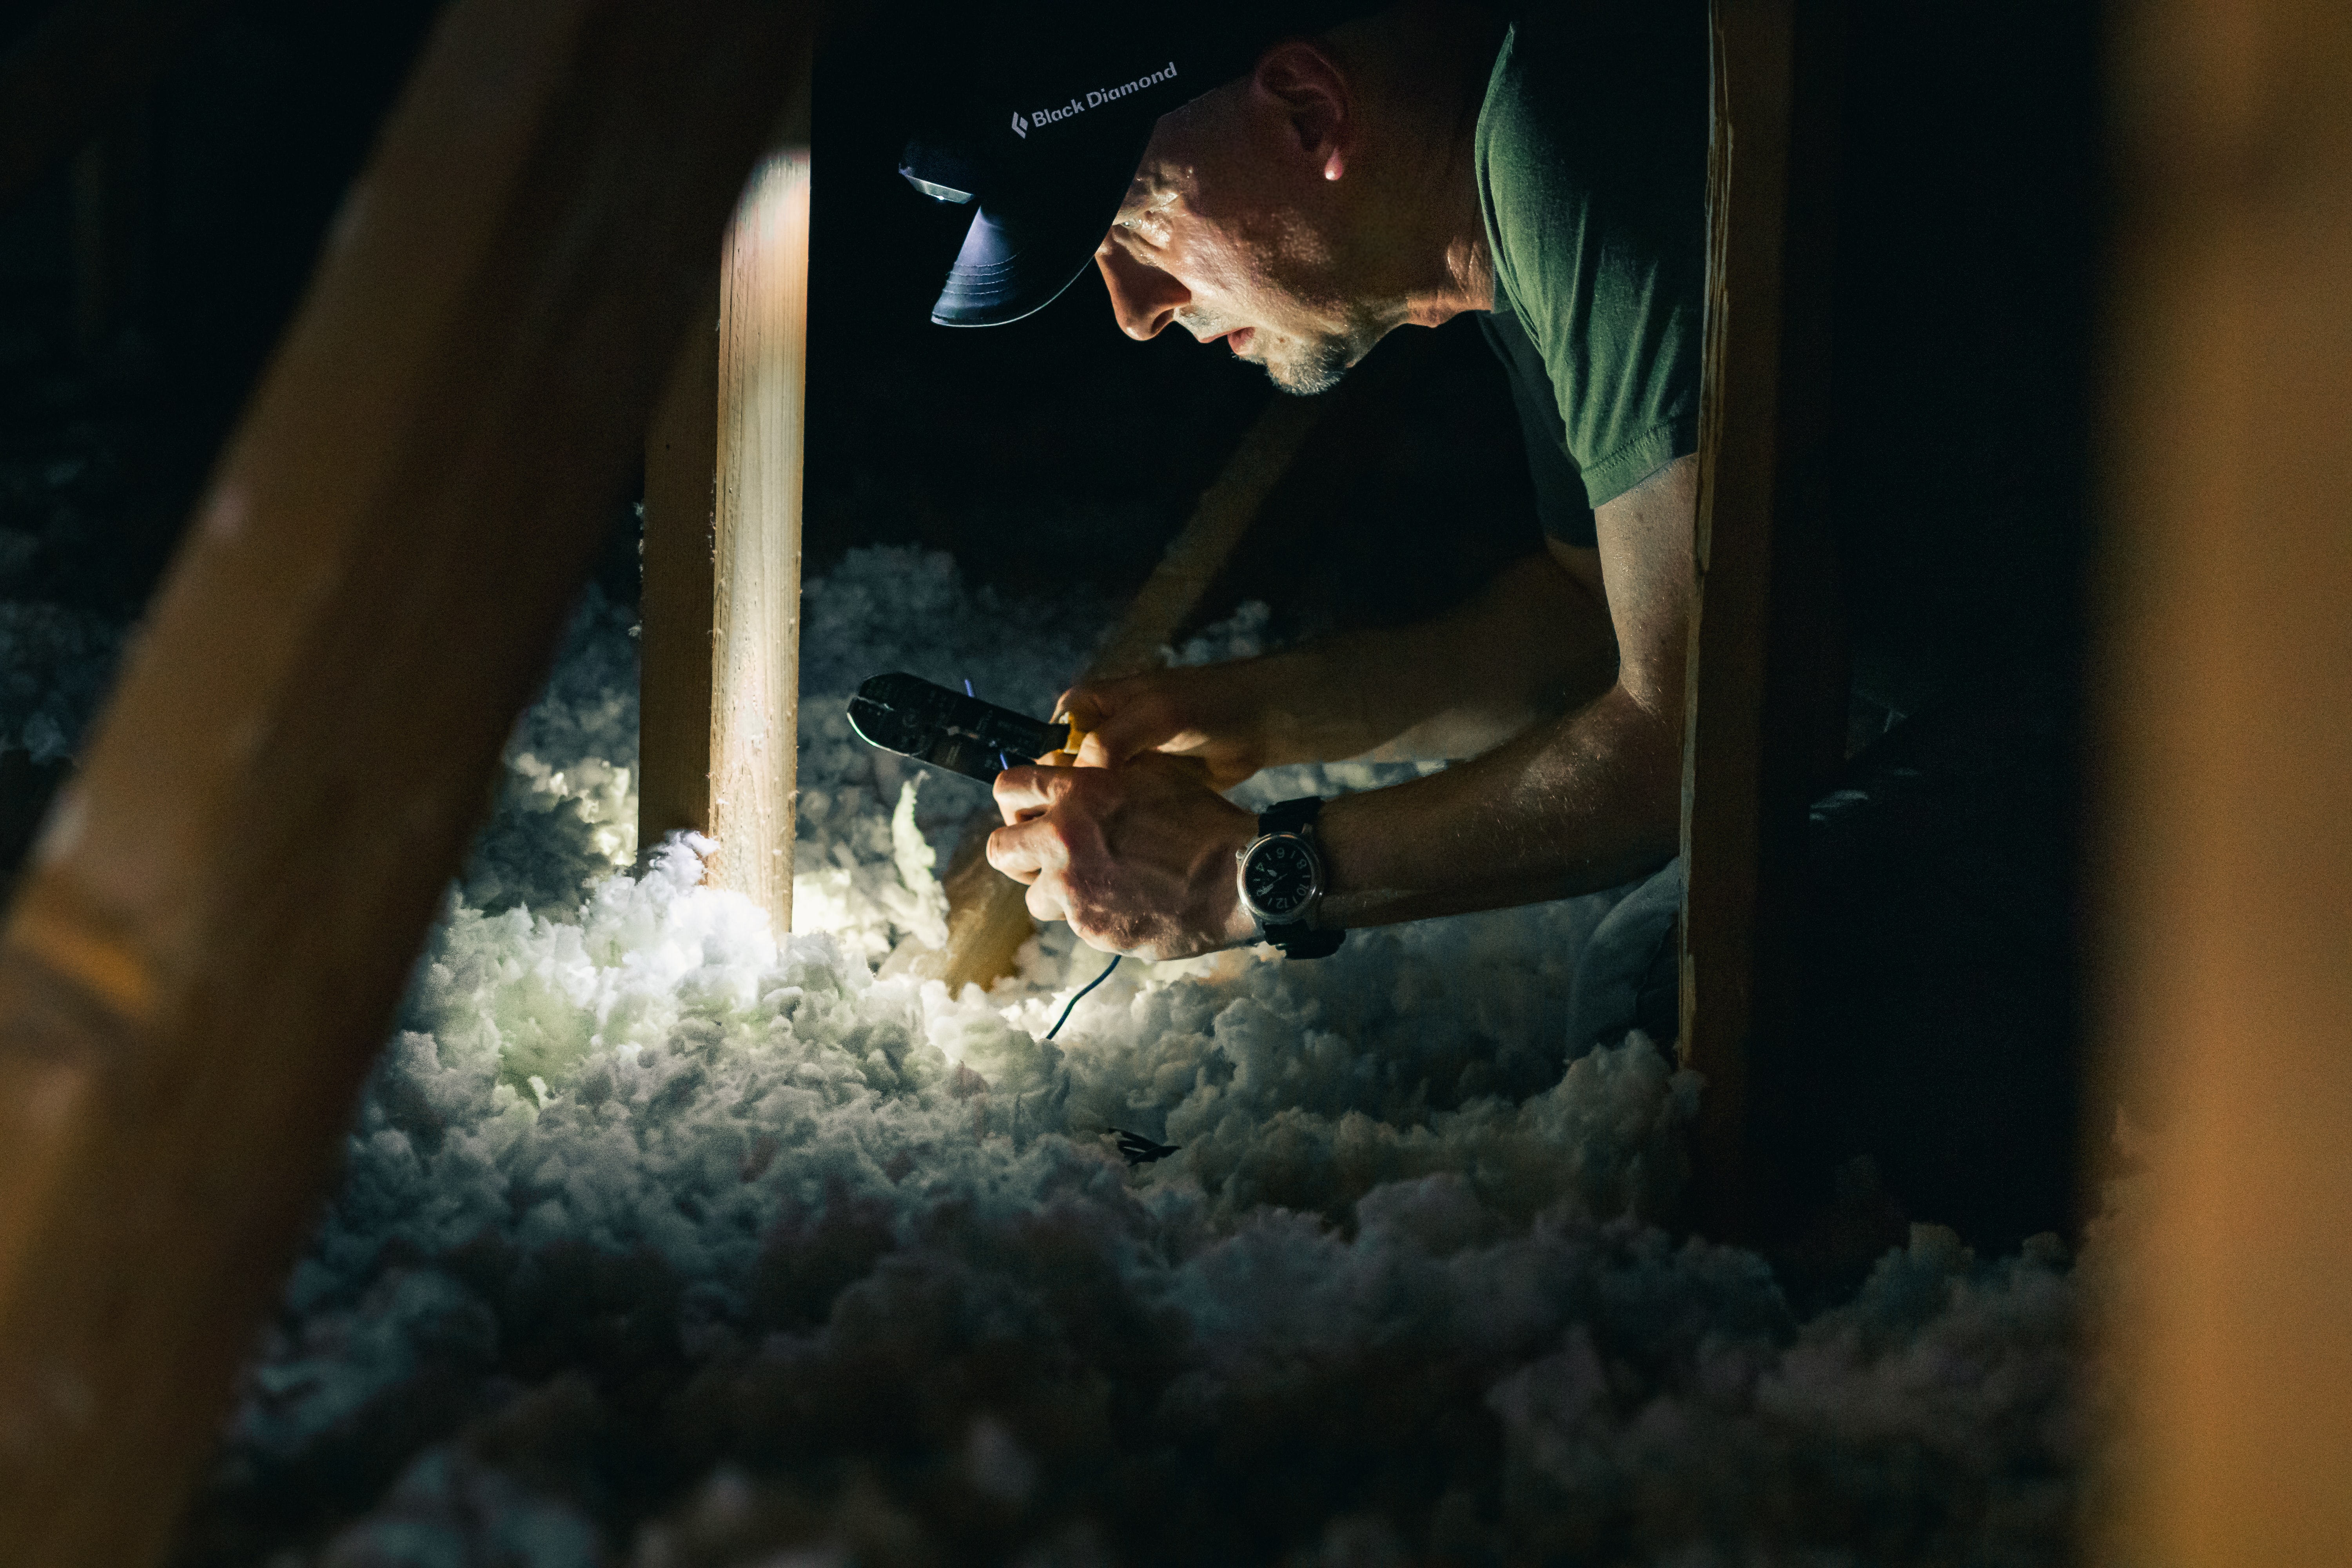 man installing insulation in attic